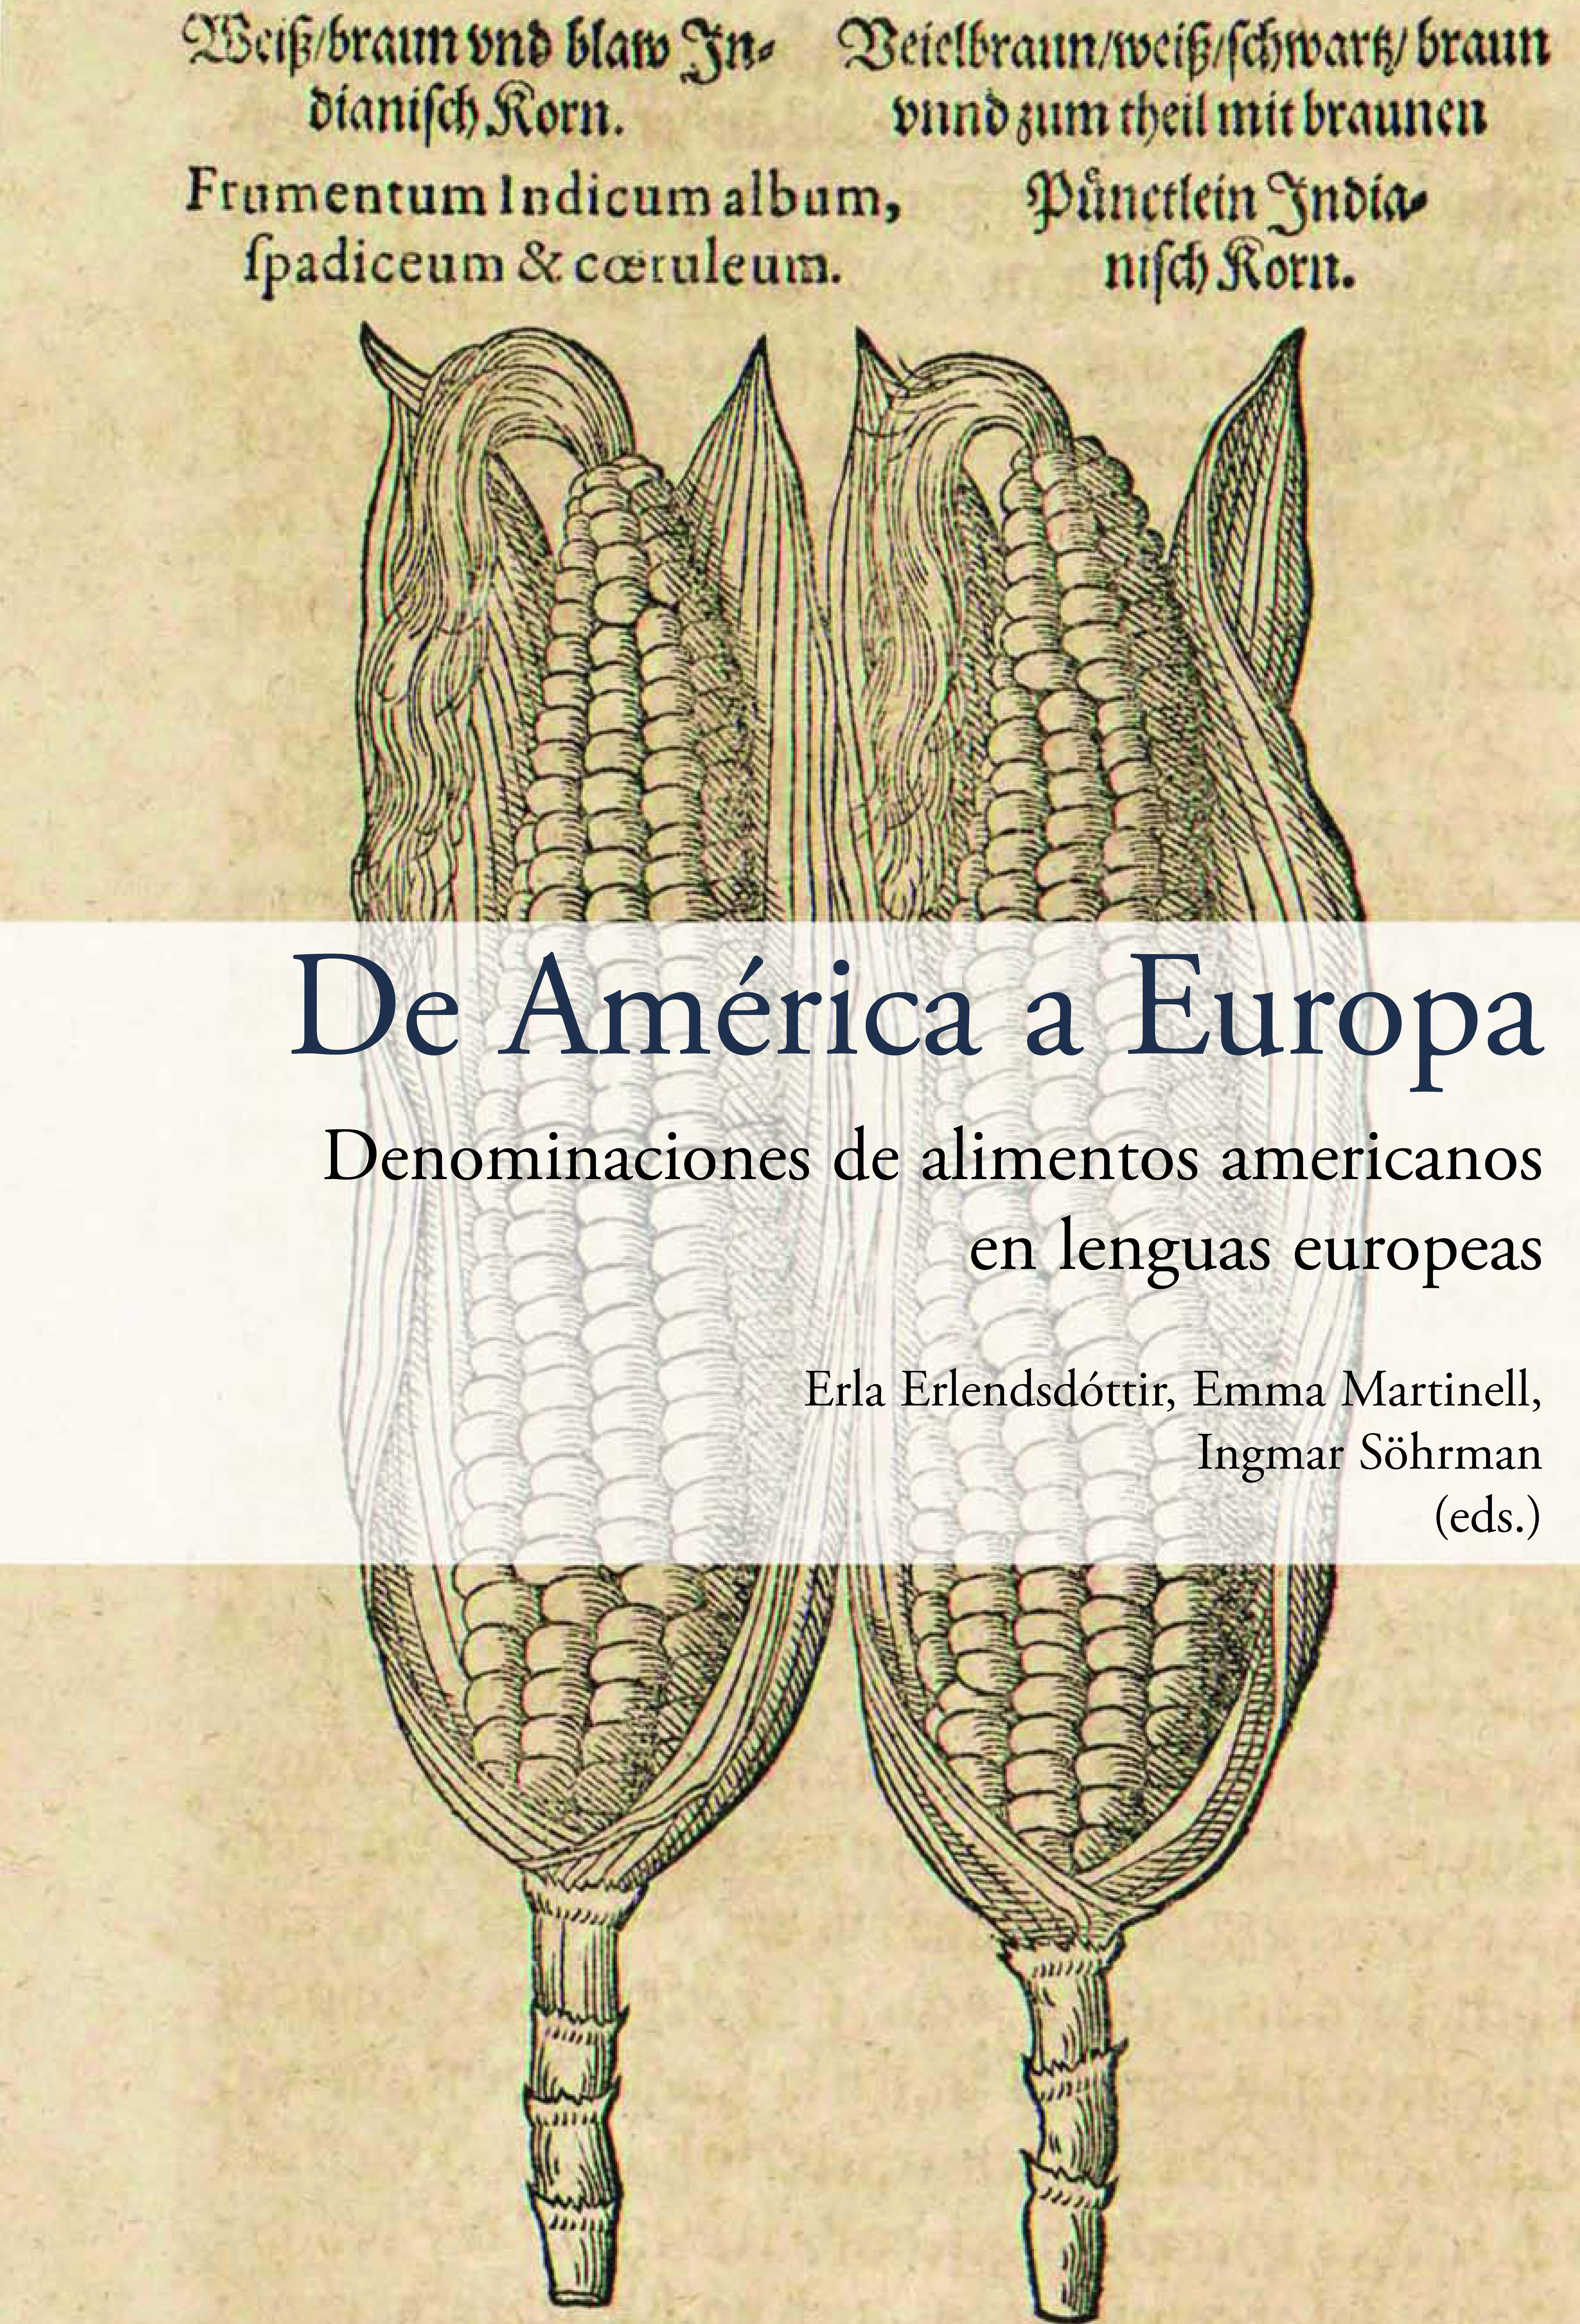 De América a Europa "Denominaciones de alimentos americanos en lenguas europeas"